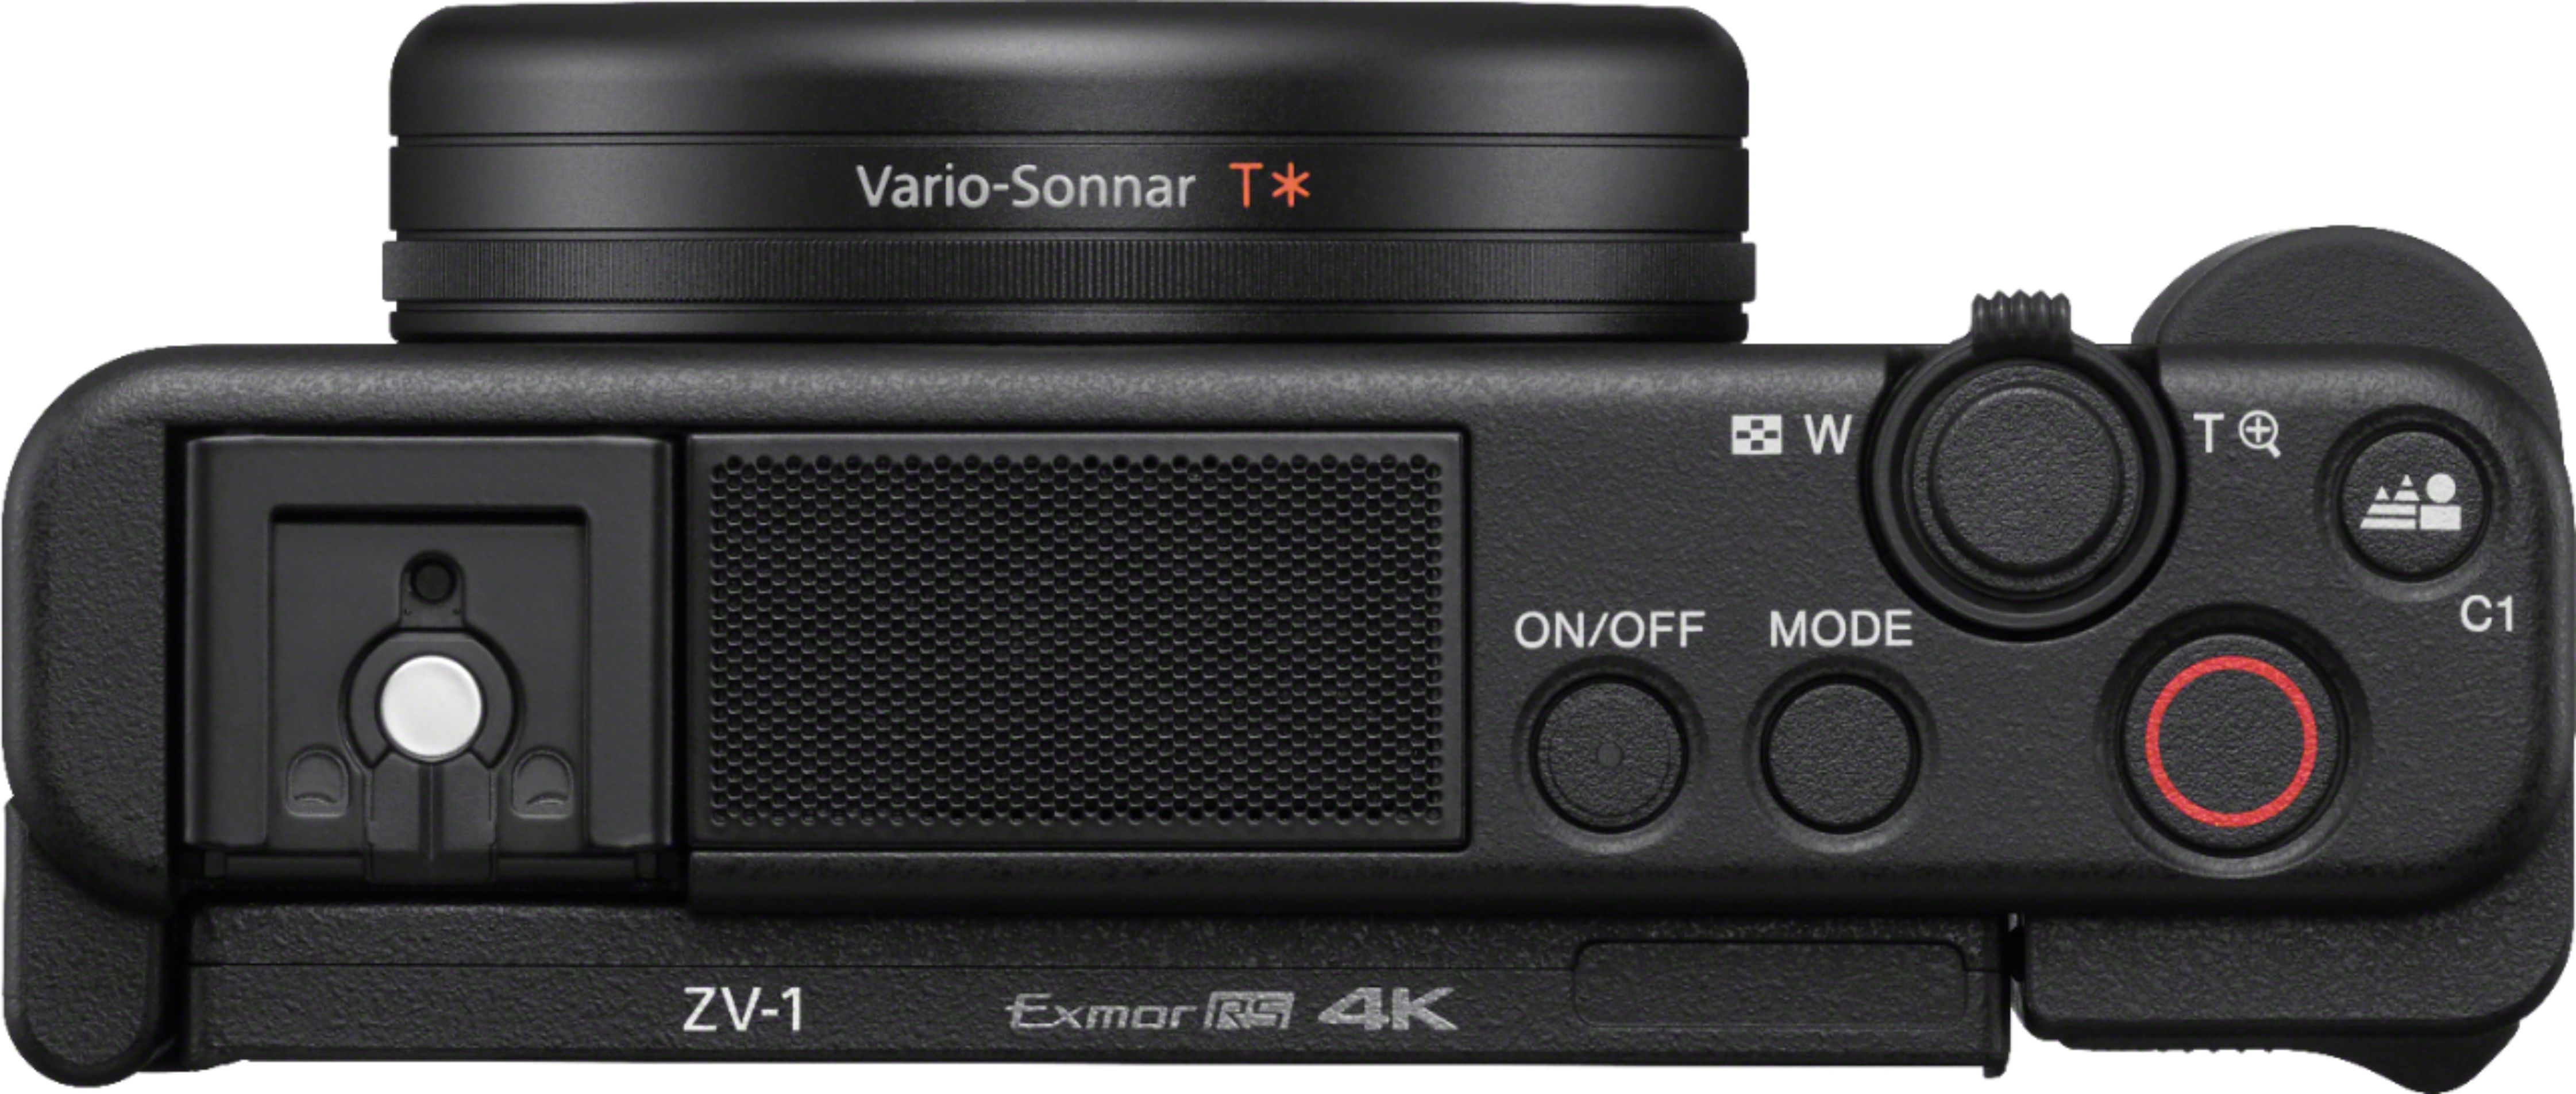 Sony ZV-1 Digital Camera, Black